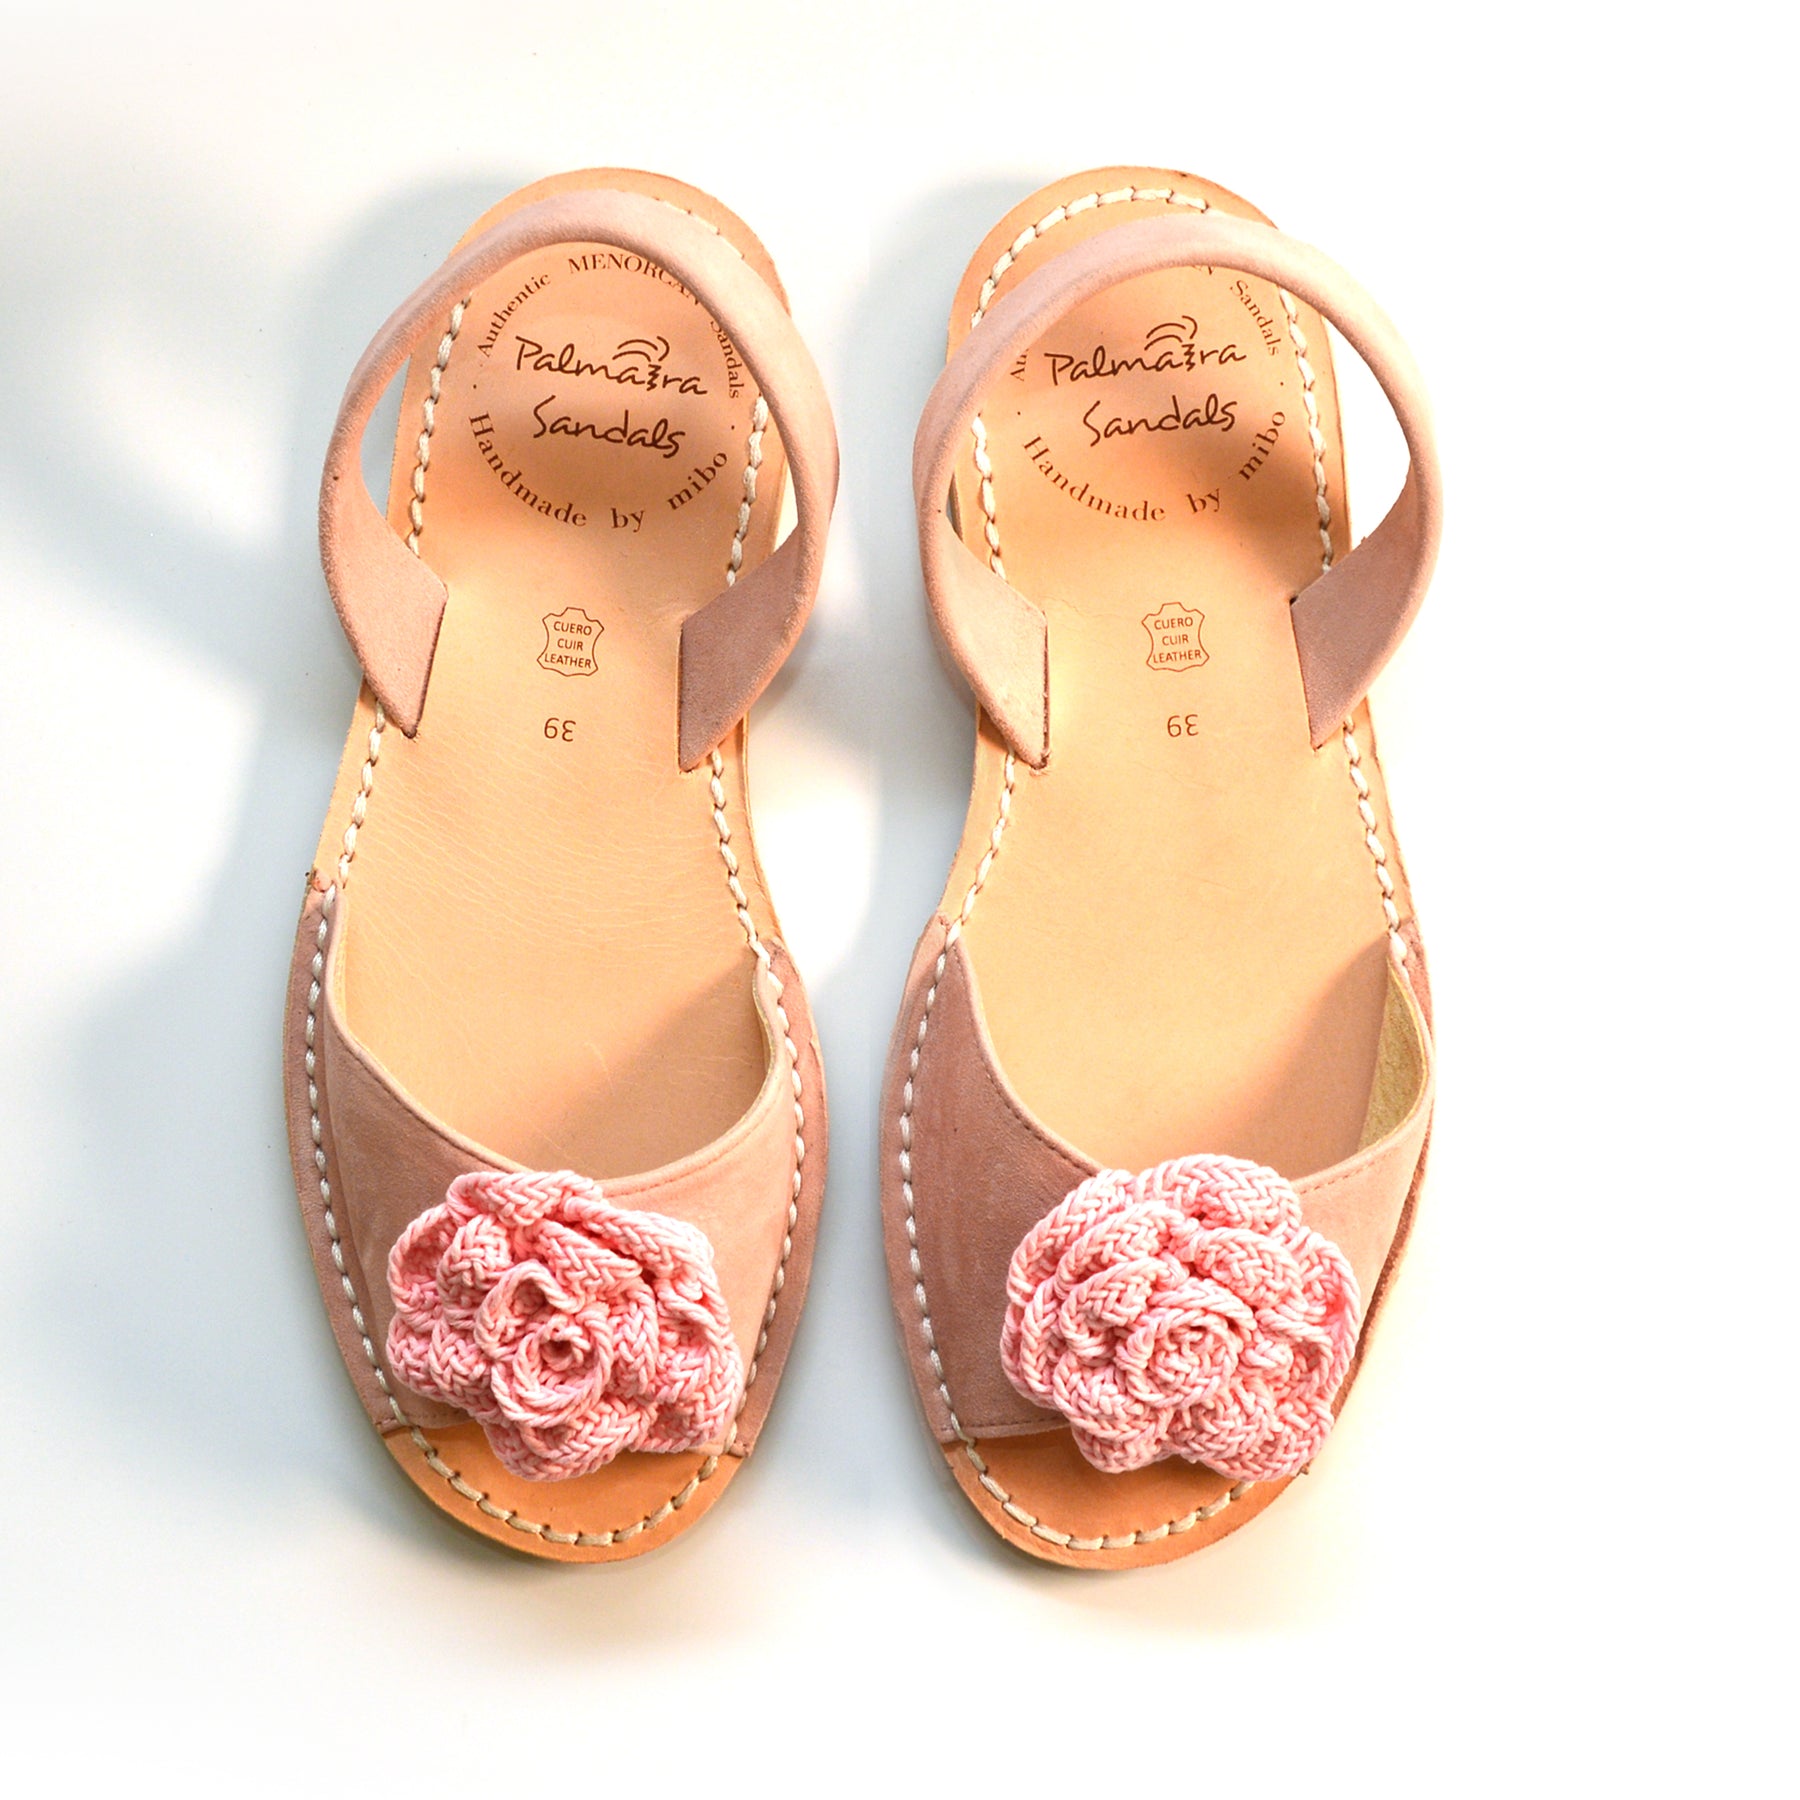 pale pink suede peeptoe slingback with flower embellishment avarcas menorcan sandals